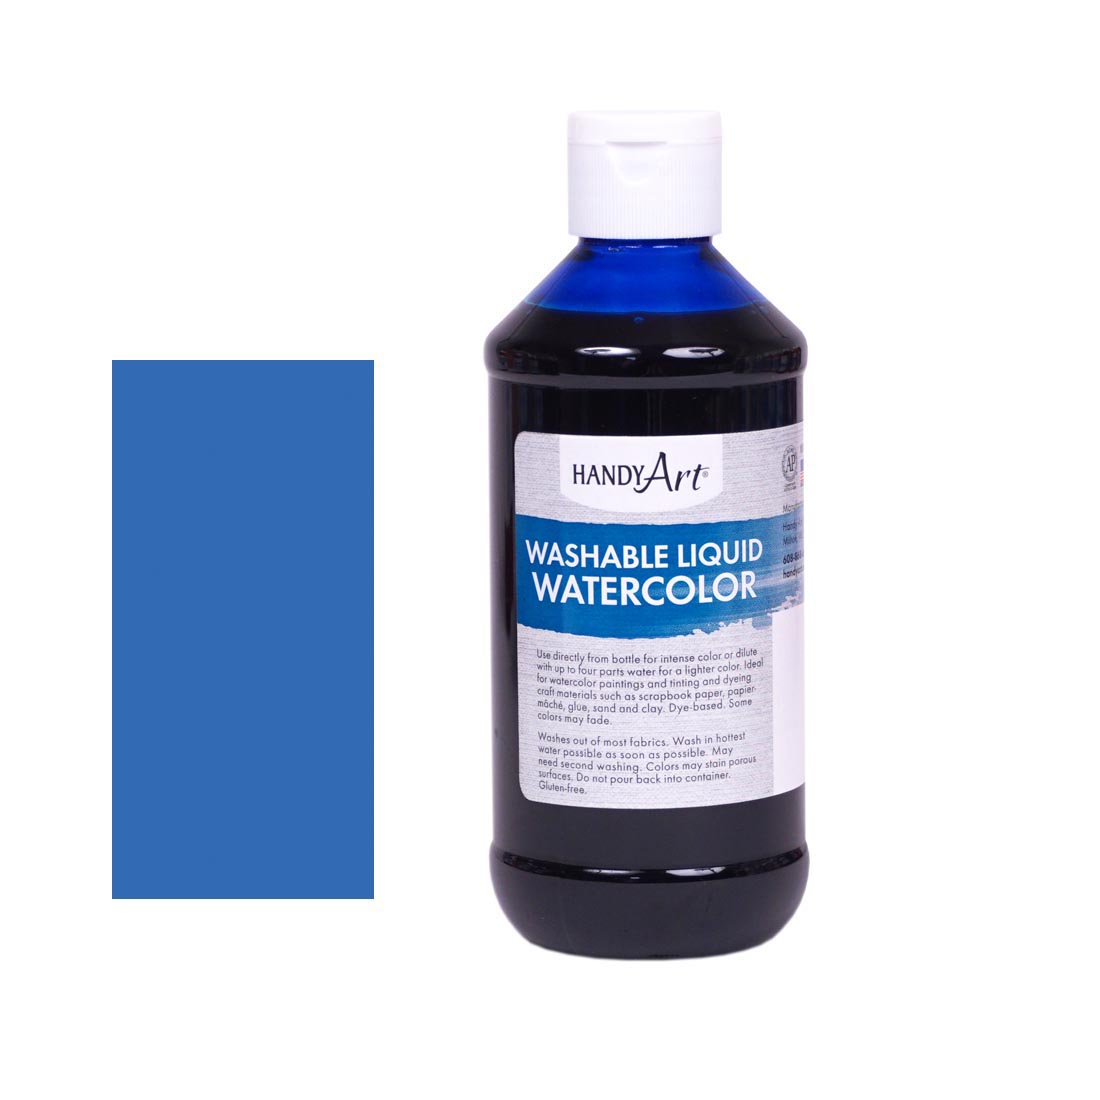 Bottle of Blue Handy Art Washable Liquid Watercolor beside a rectangular color swatch